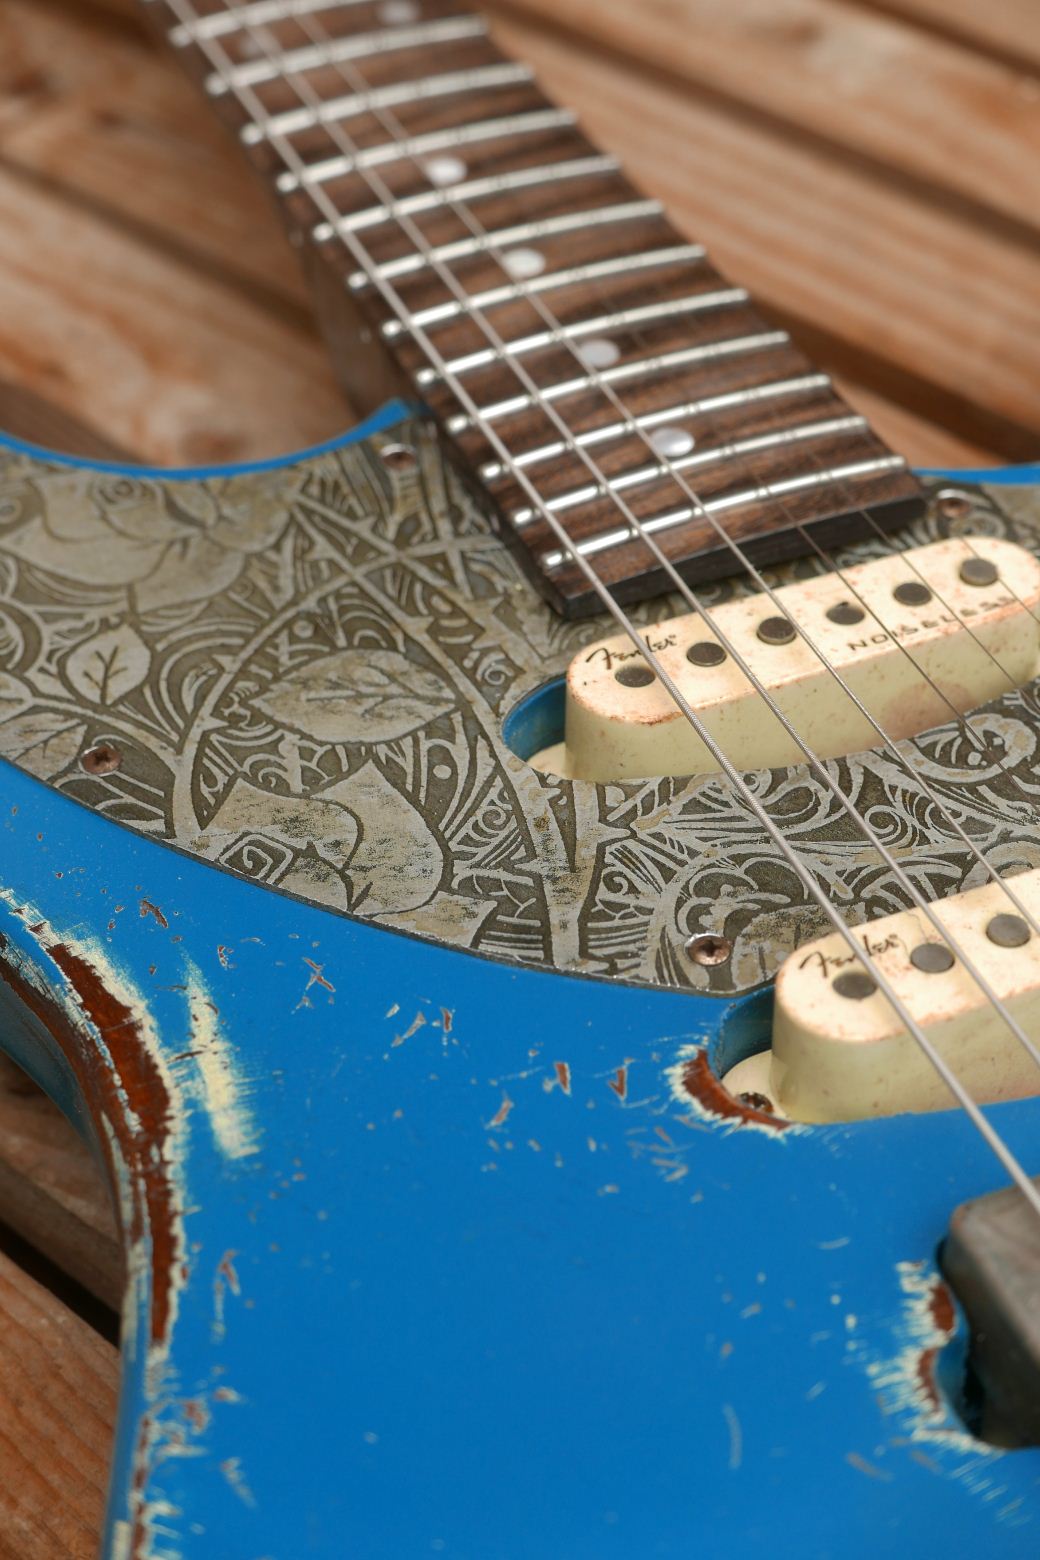 chitarra stratocaster dettaglio pickups